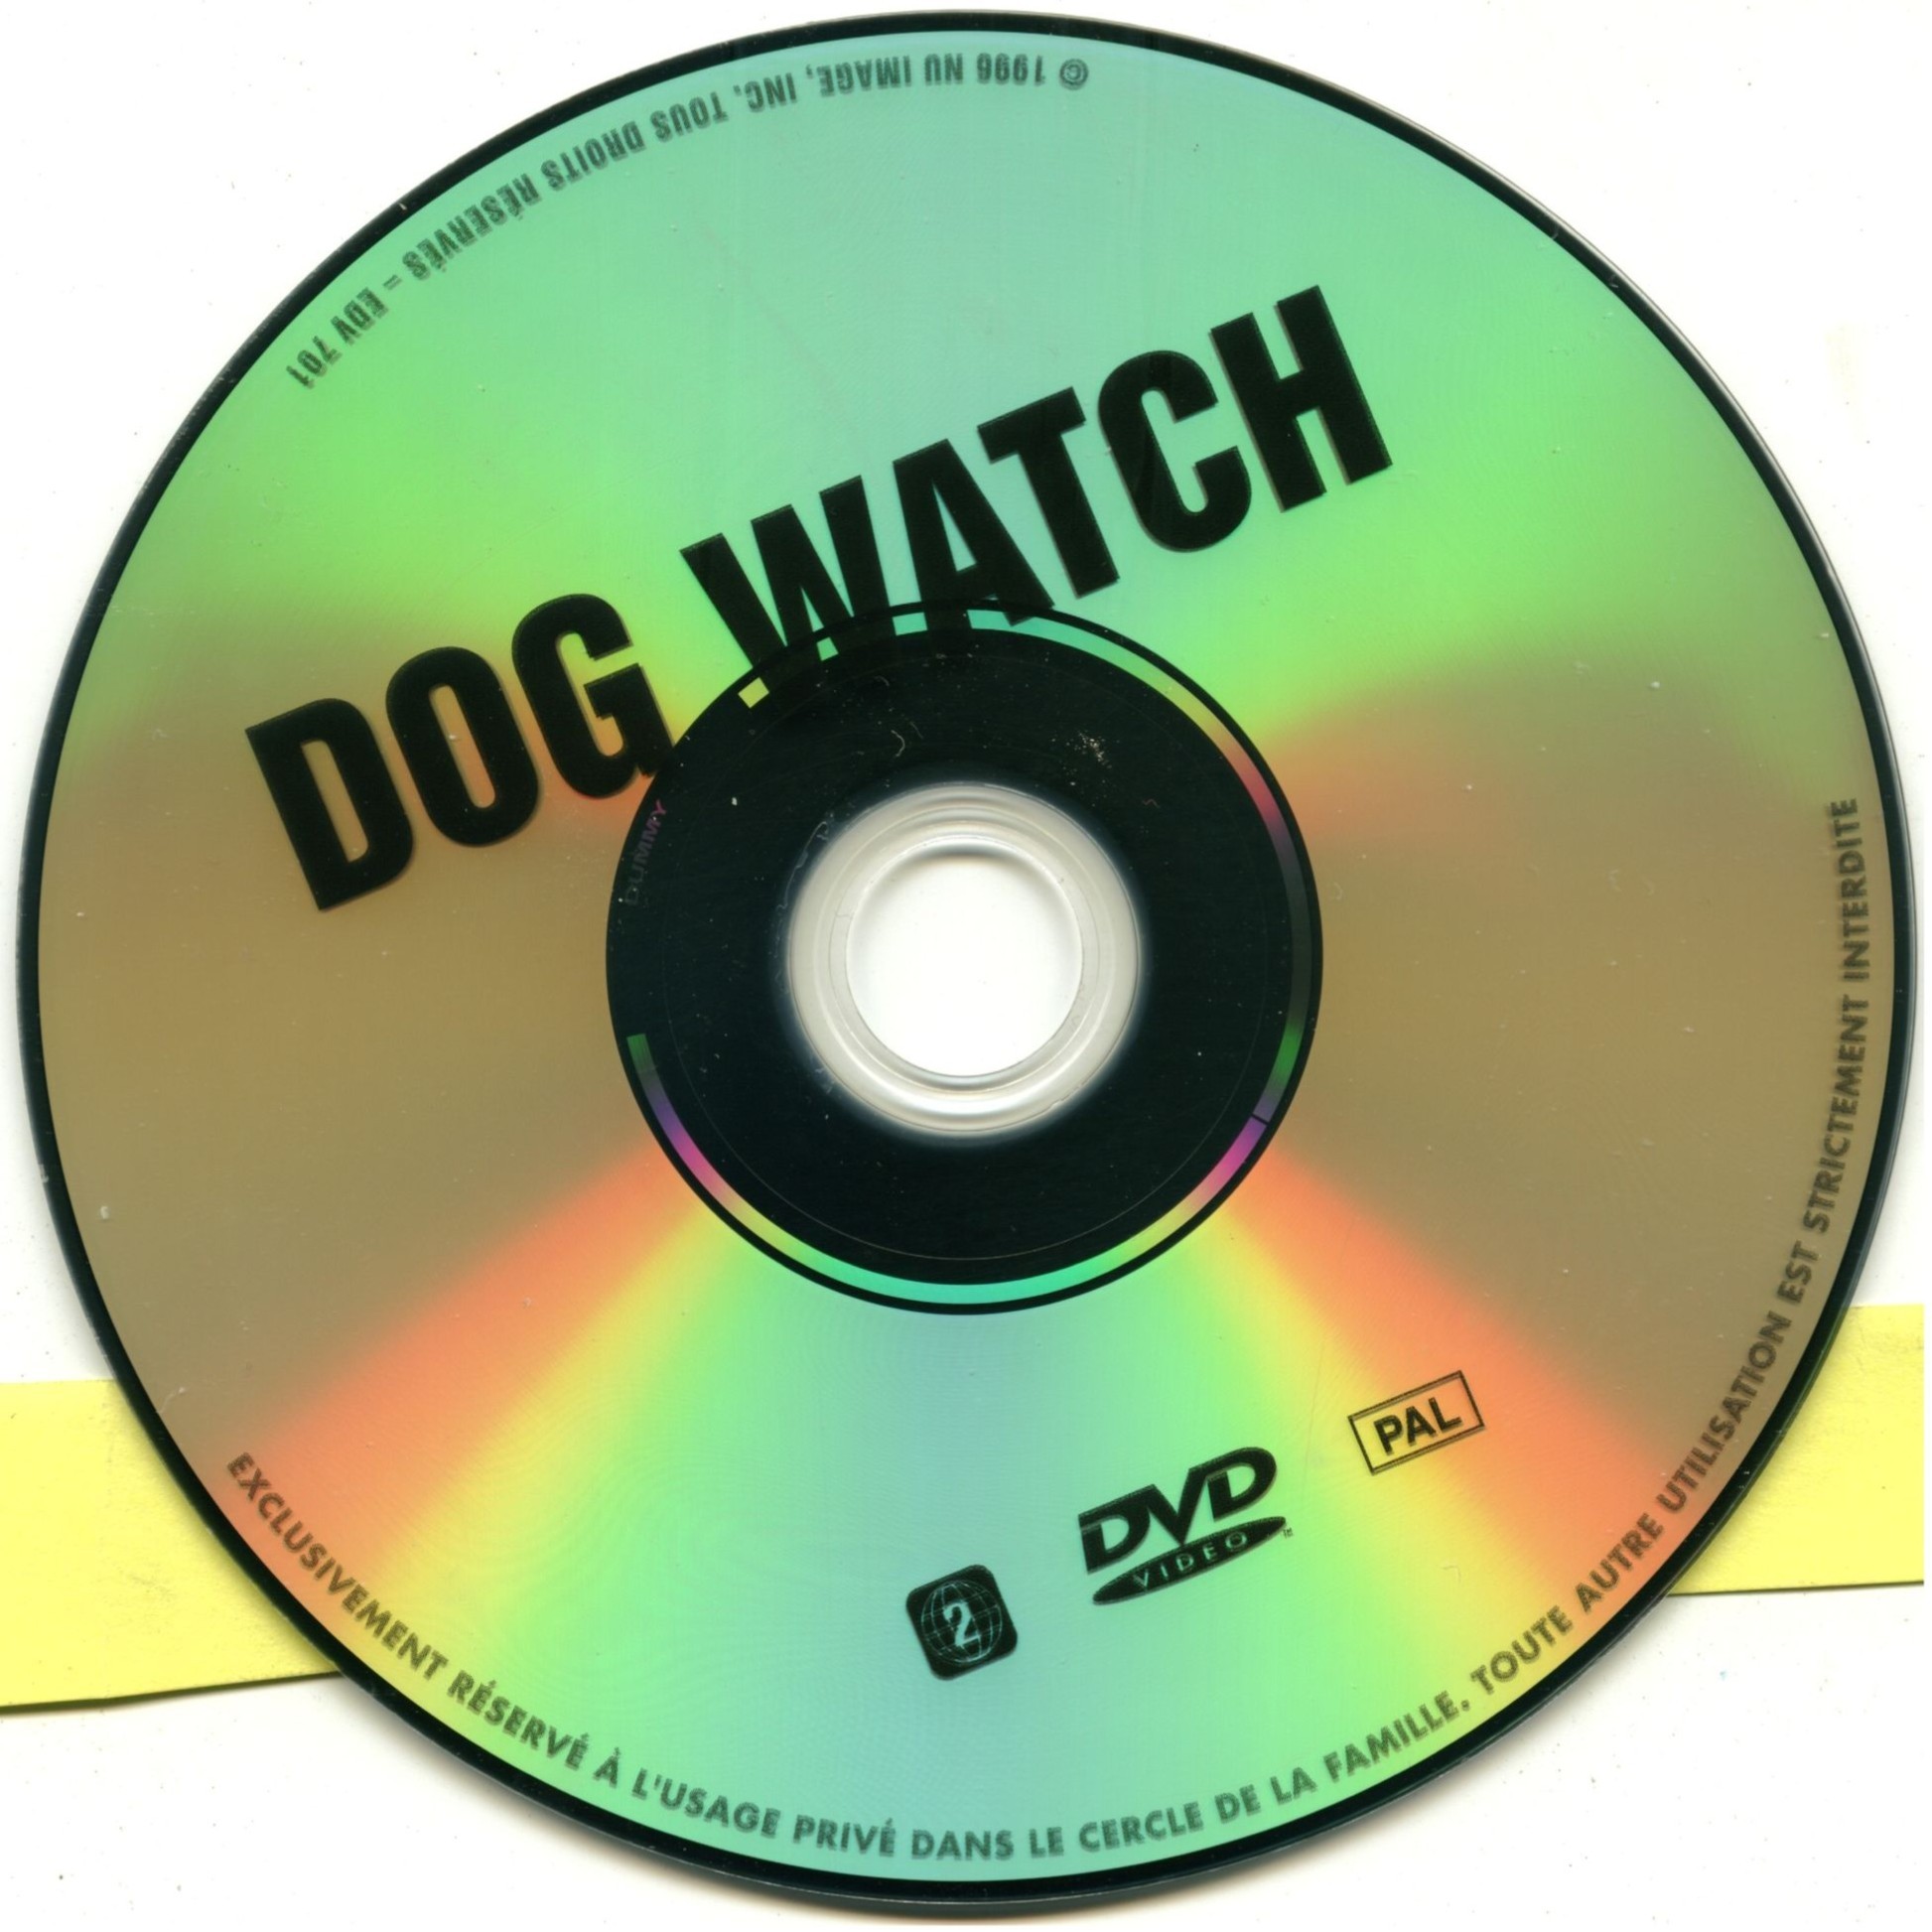 Dog watch